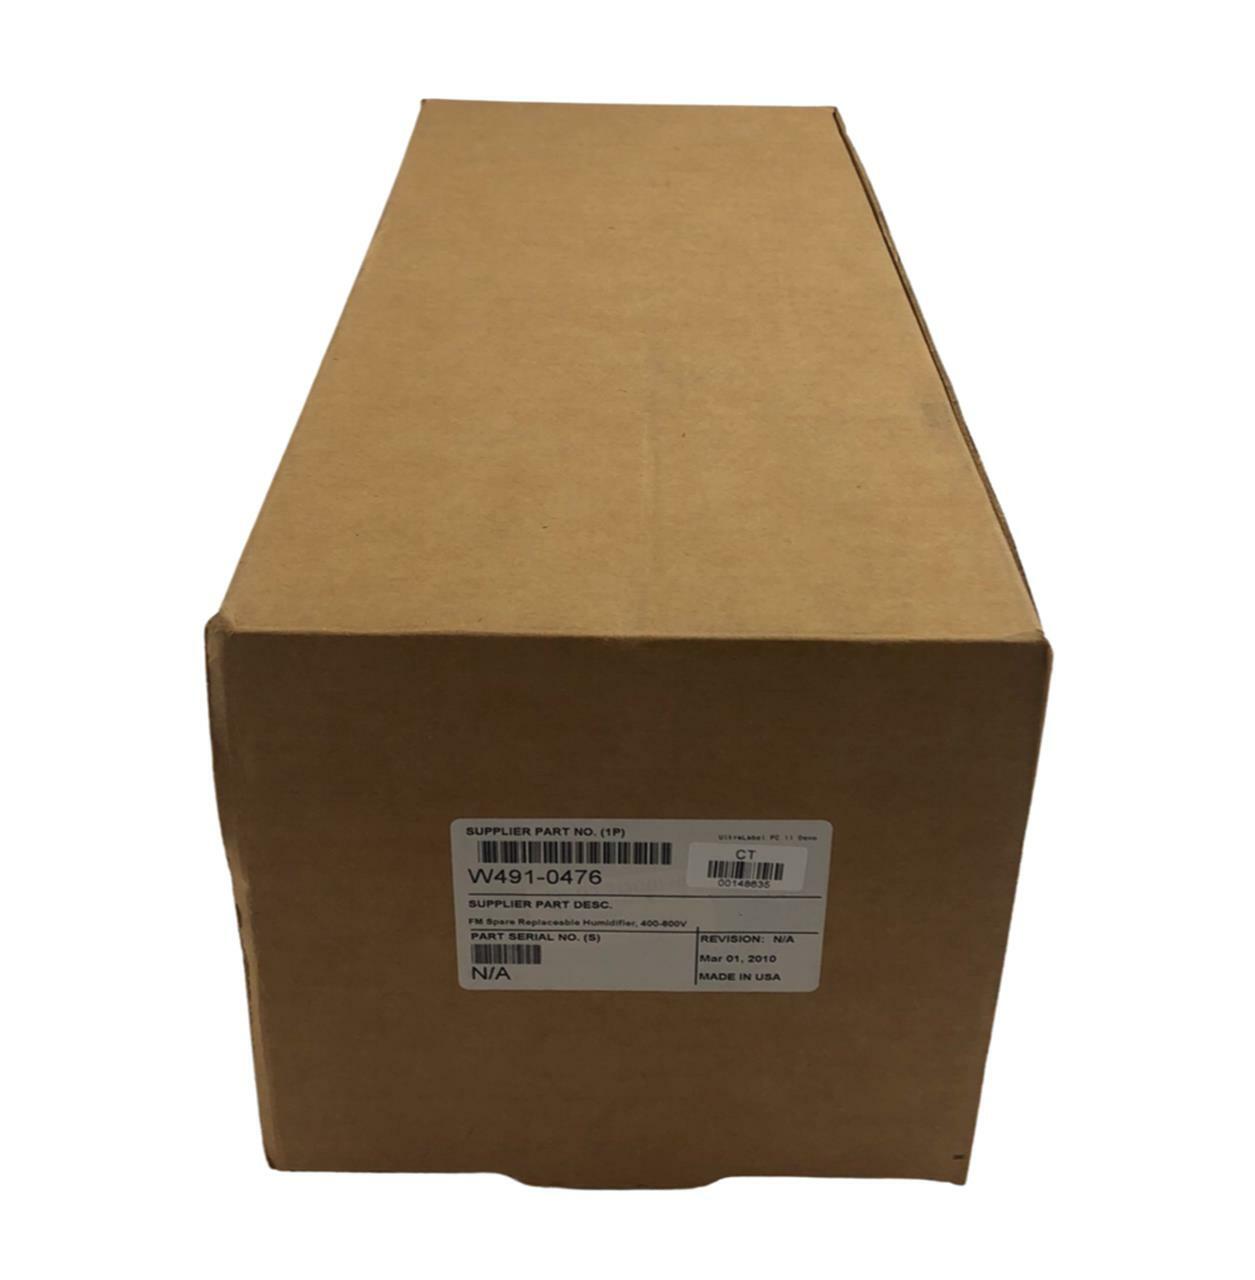 NEW - Open Box - Schneider APC W491-0476 Spare Replaceable Humidifier 400-600V